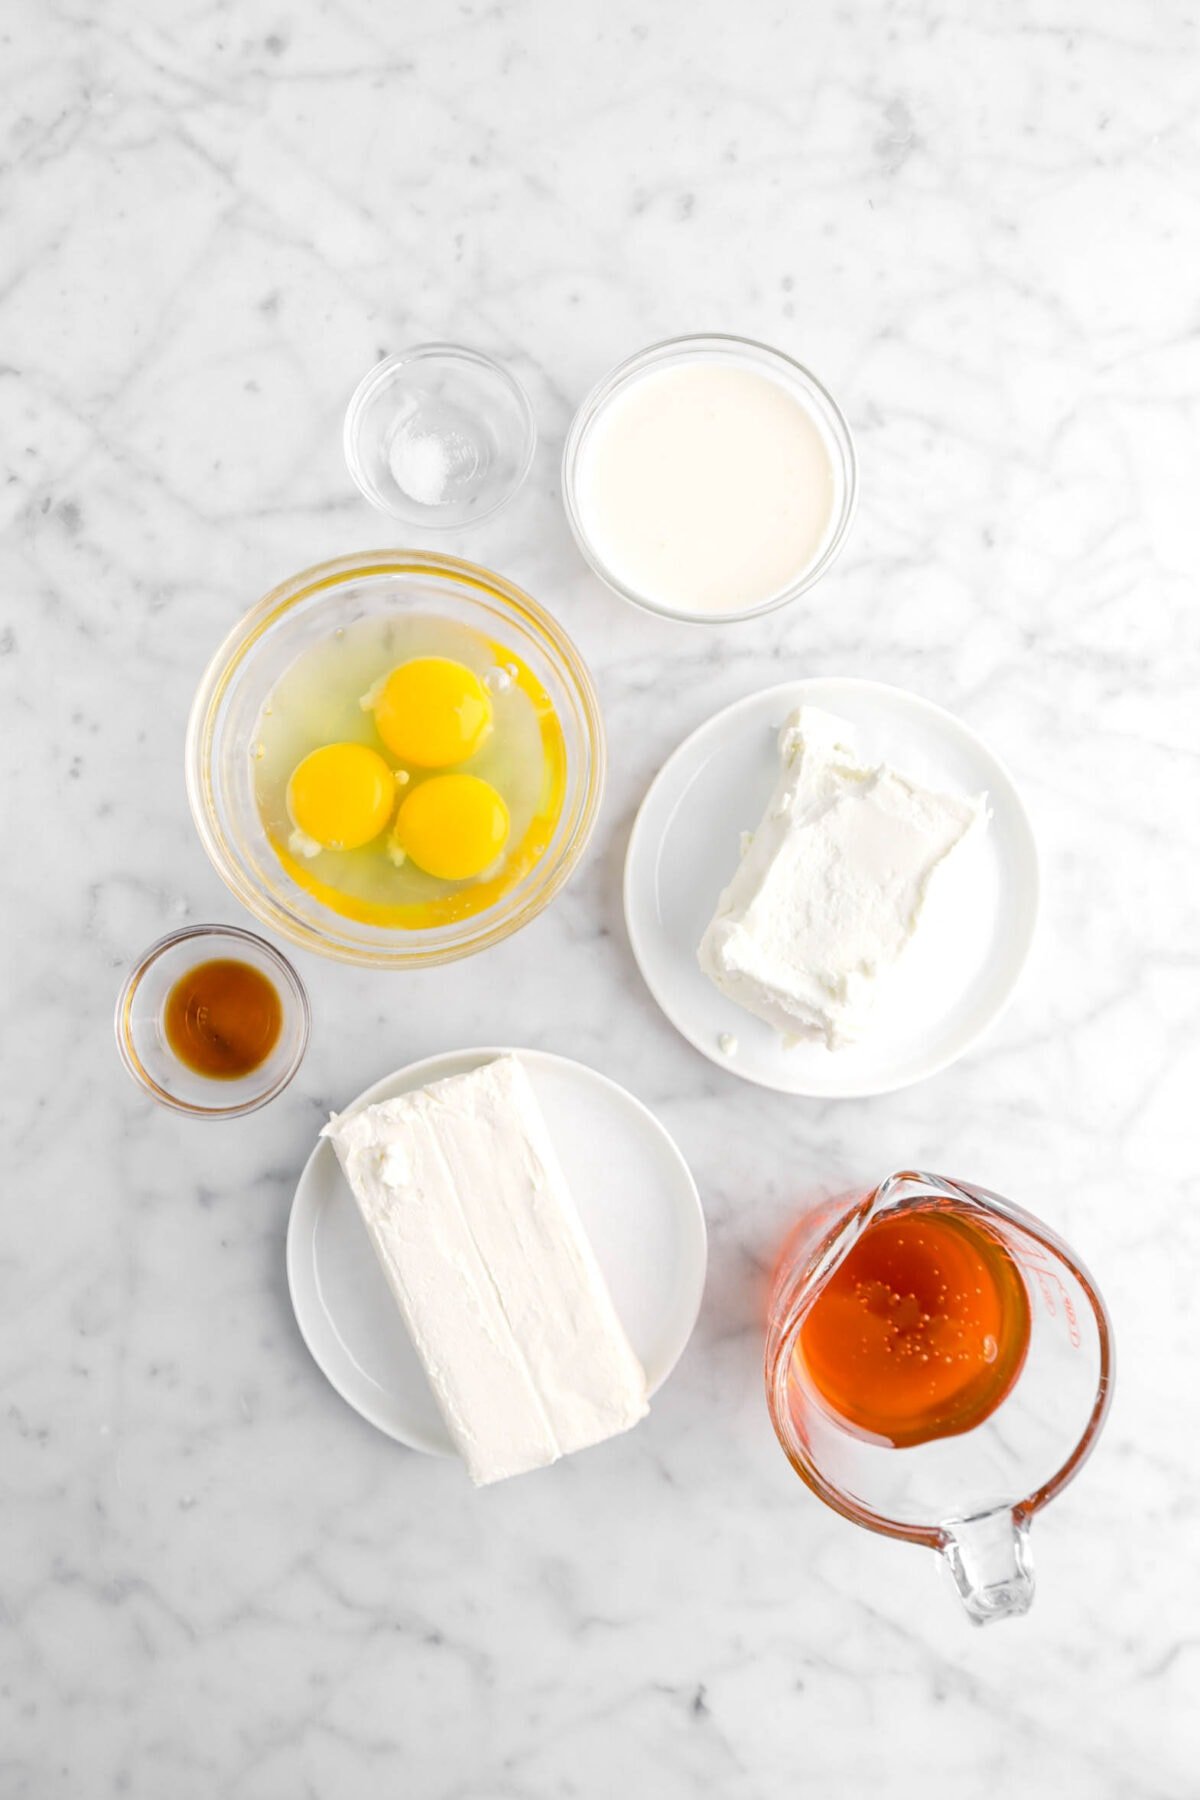 salt, heavy cream, eggs, goat cheese, cream cheese, vanilla, and honey on marble counter